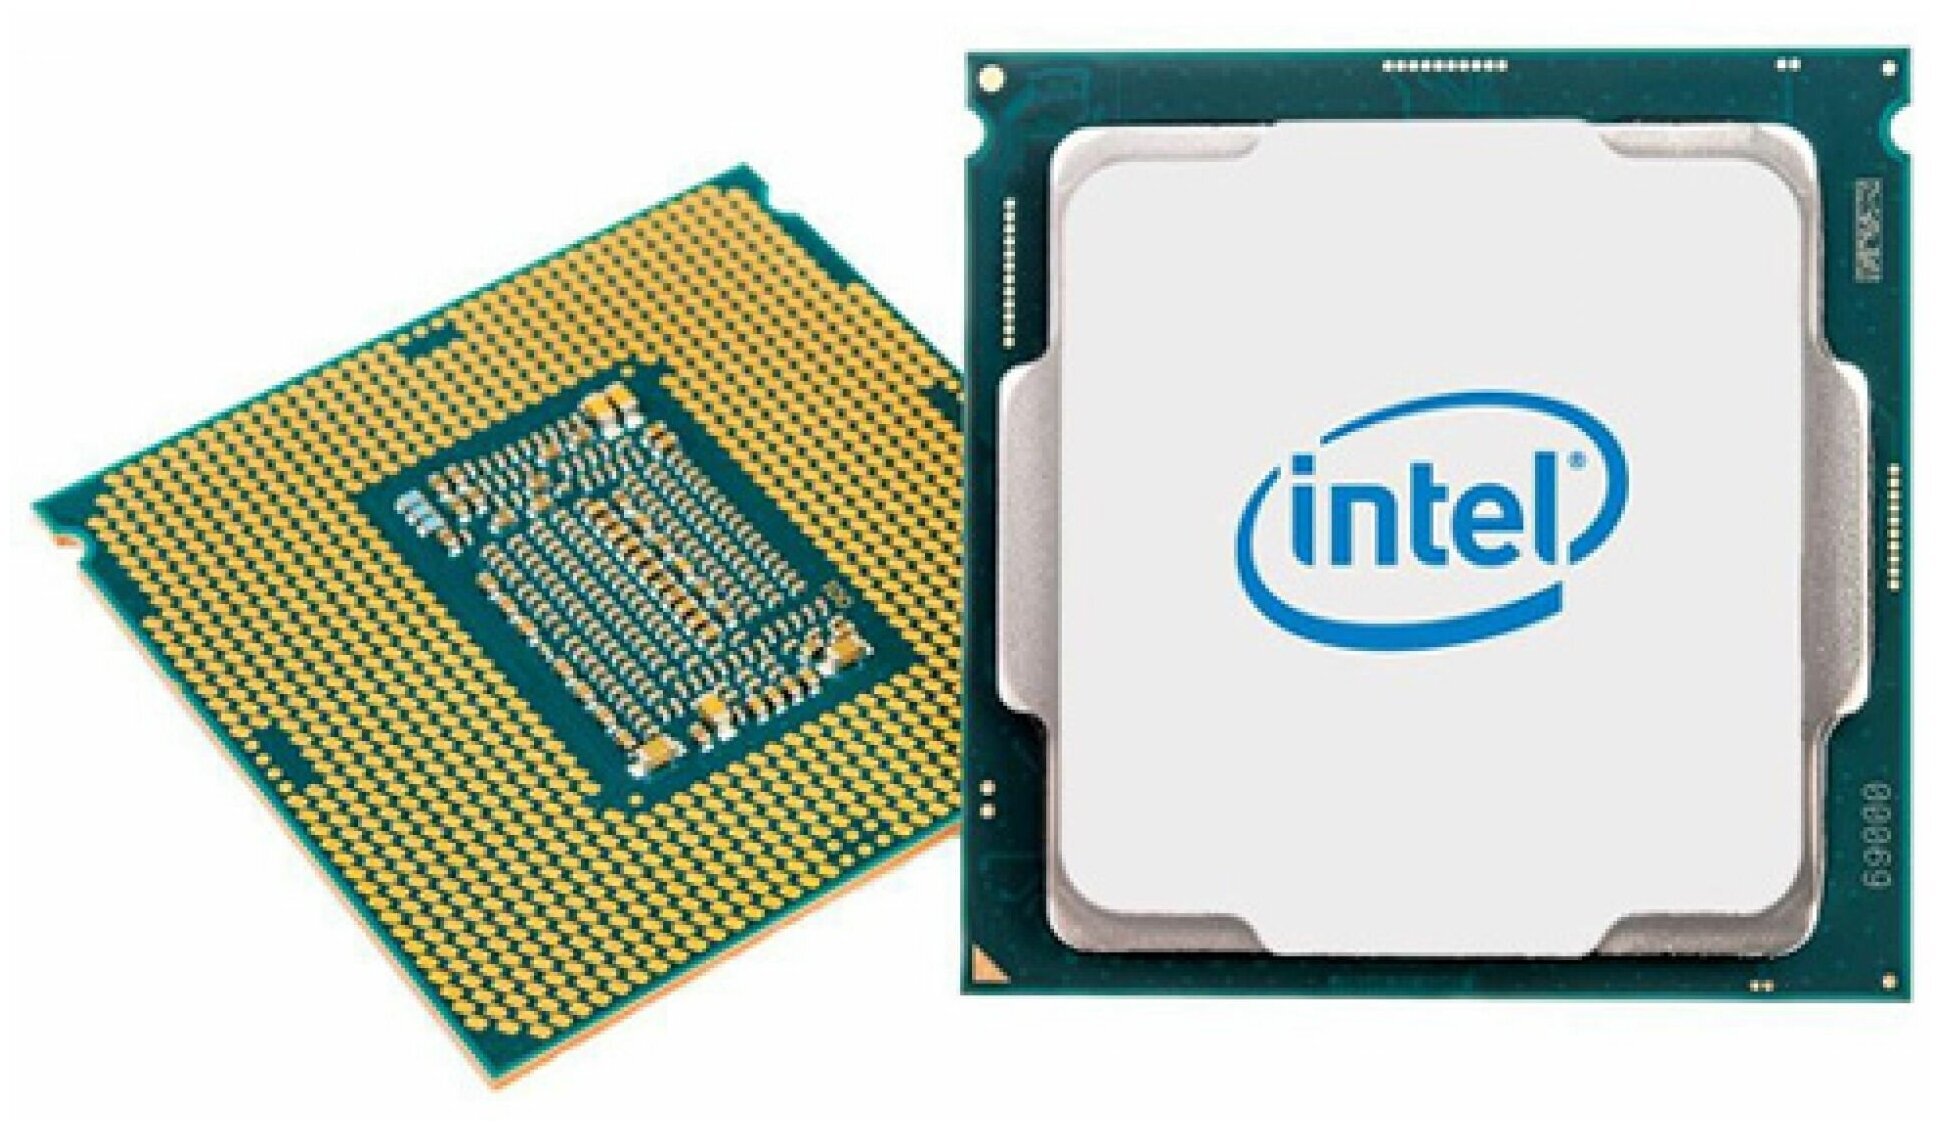 Intel 3 pro. Процессор Intel Core i3-10105f. Intel Core i5-11600k. Процессор Intel Core i7-9700f. Процессор i3 10100f.